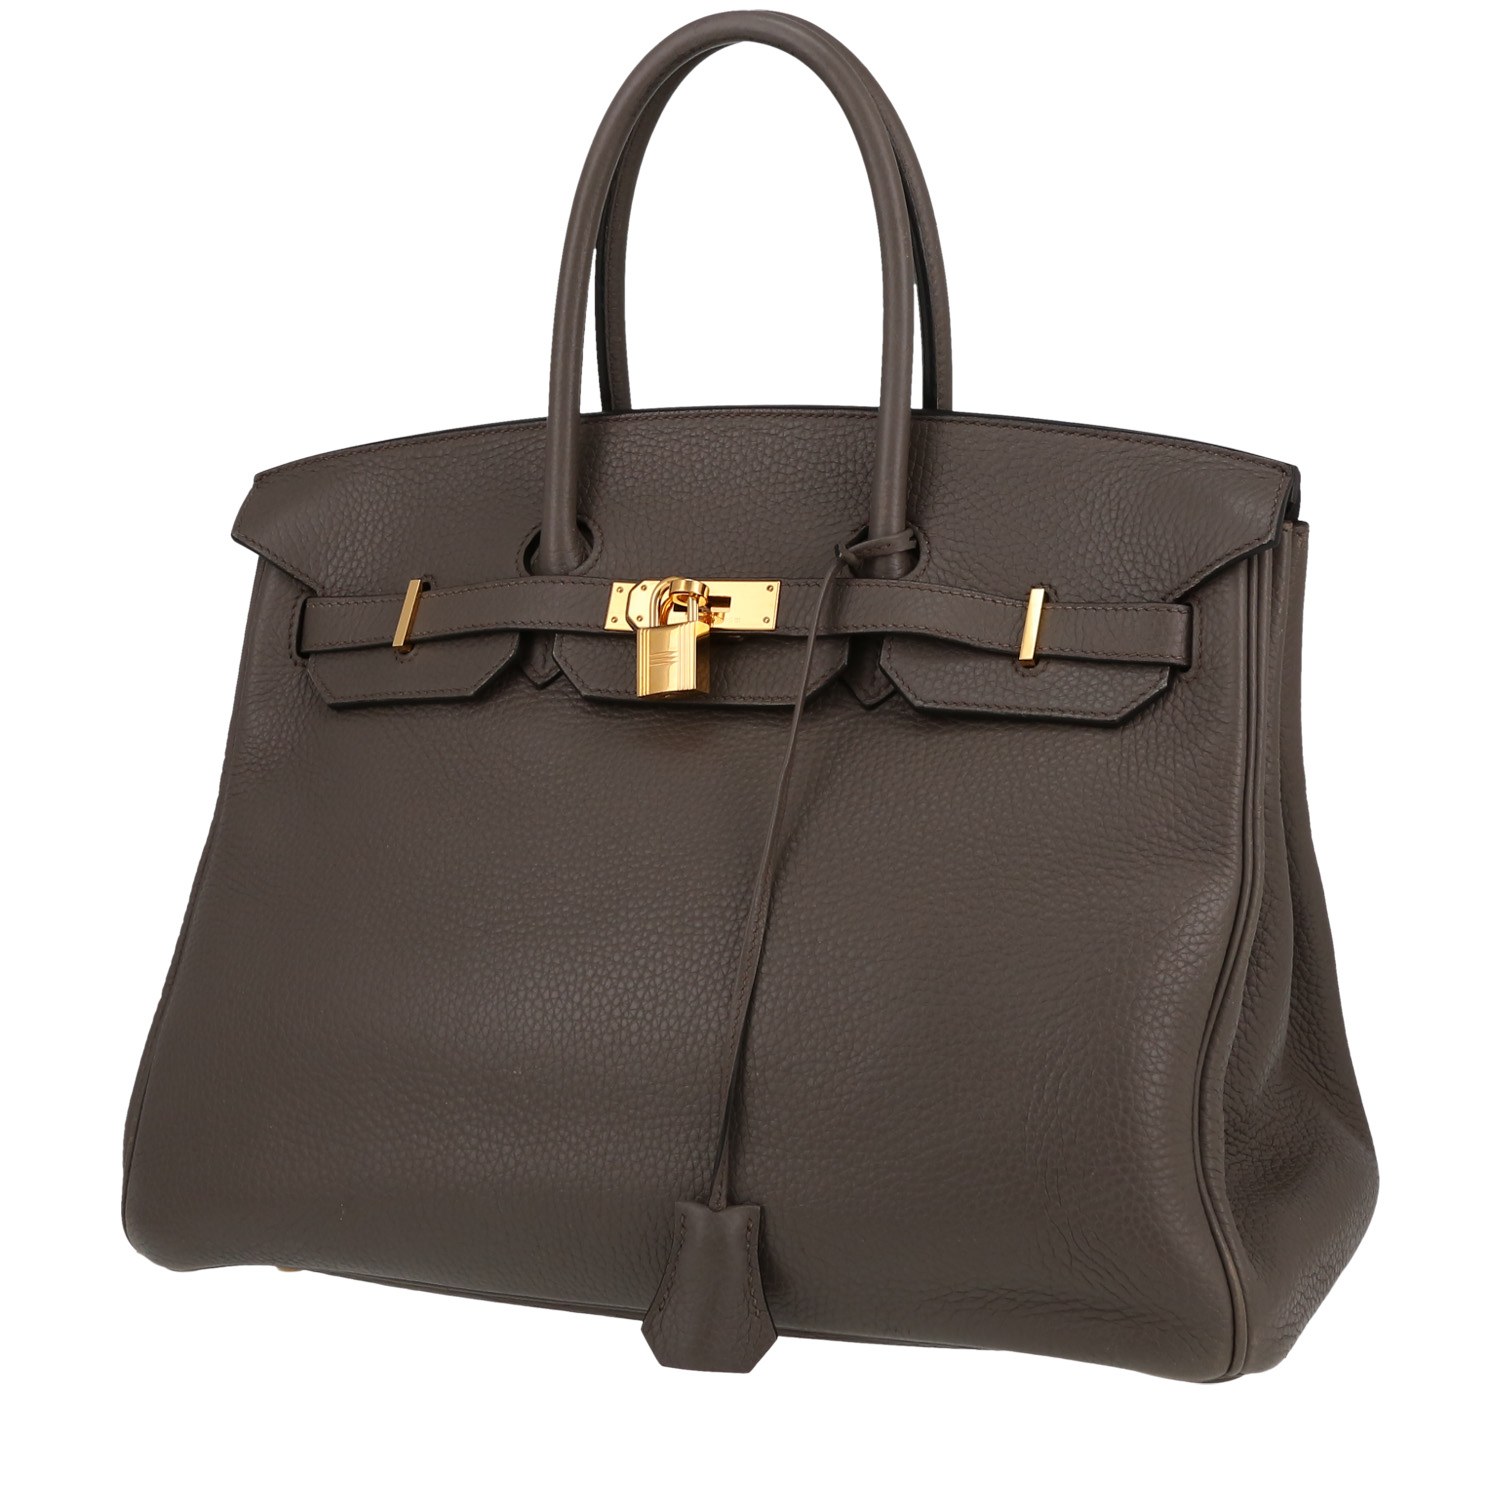 Hermès  Birkin 35 cm handbag  in grey togo leather - 00pp